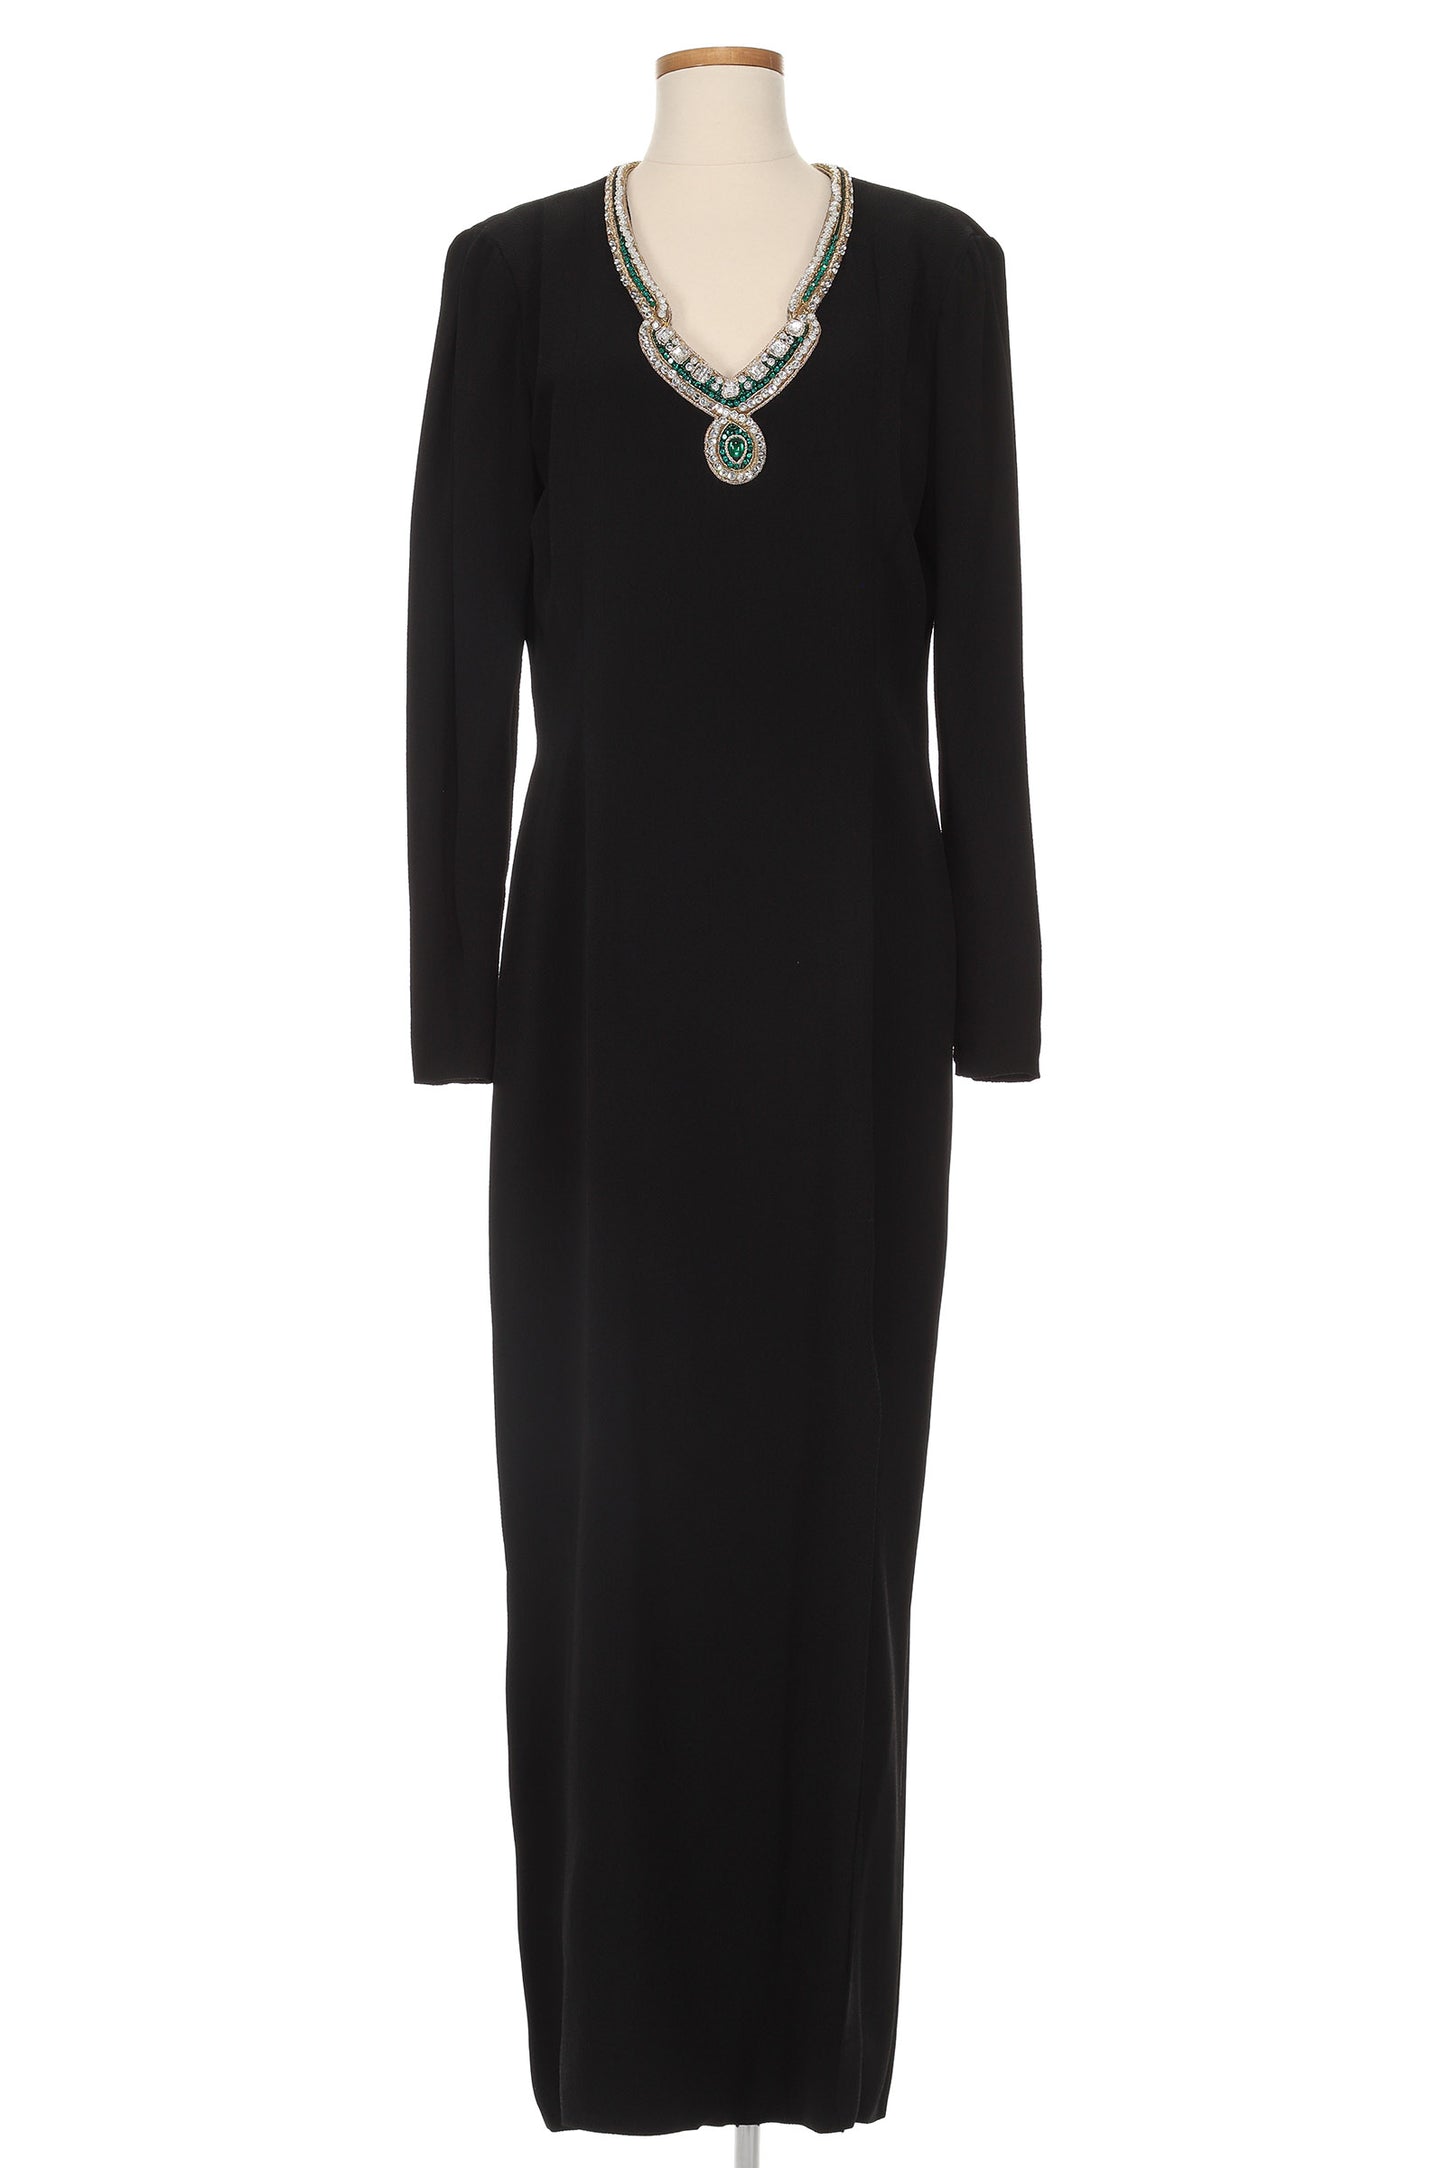 Pauline Trigere 1970's Black Embellished Long Sleeve Dress